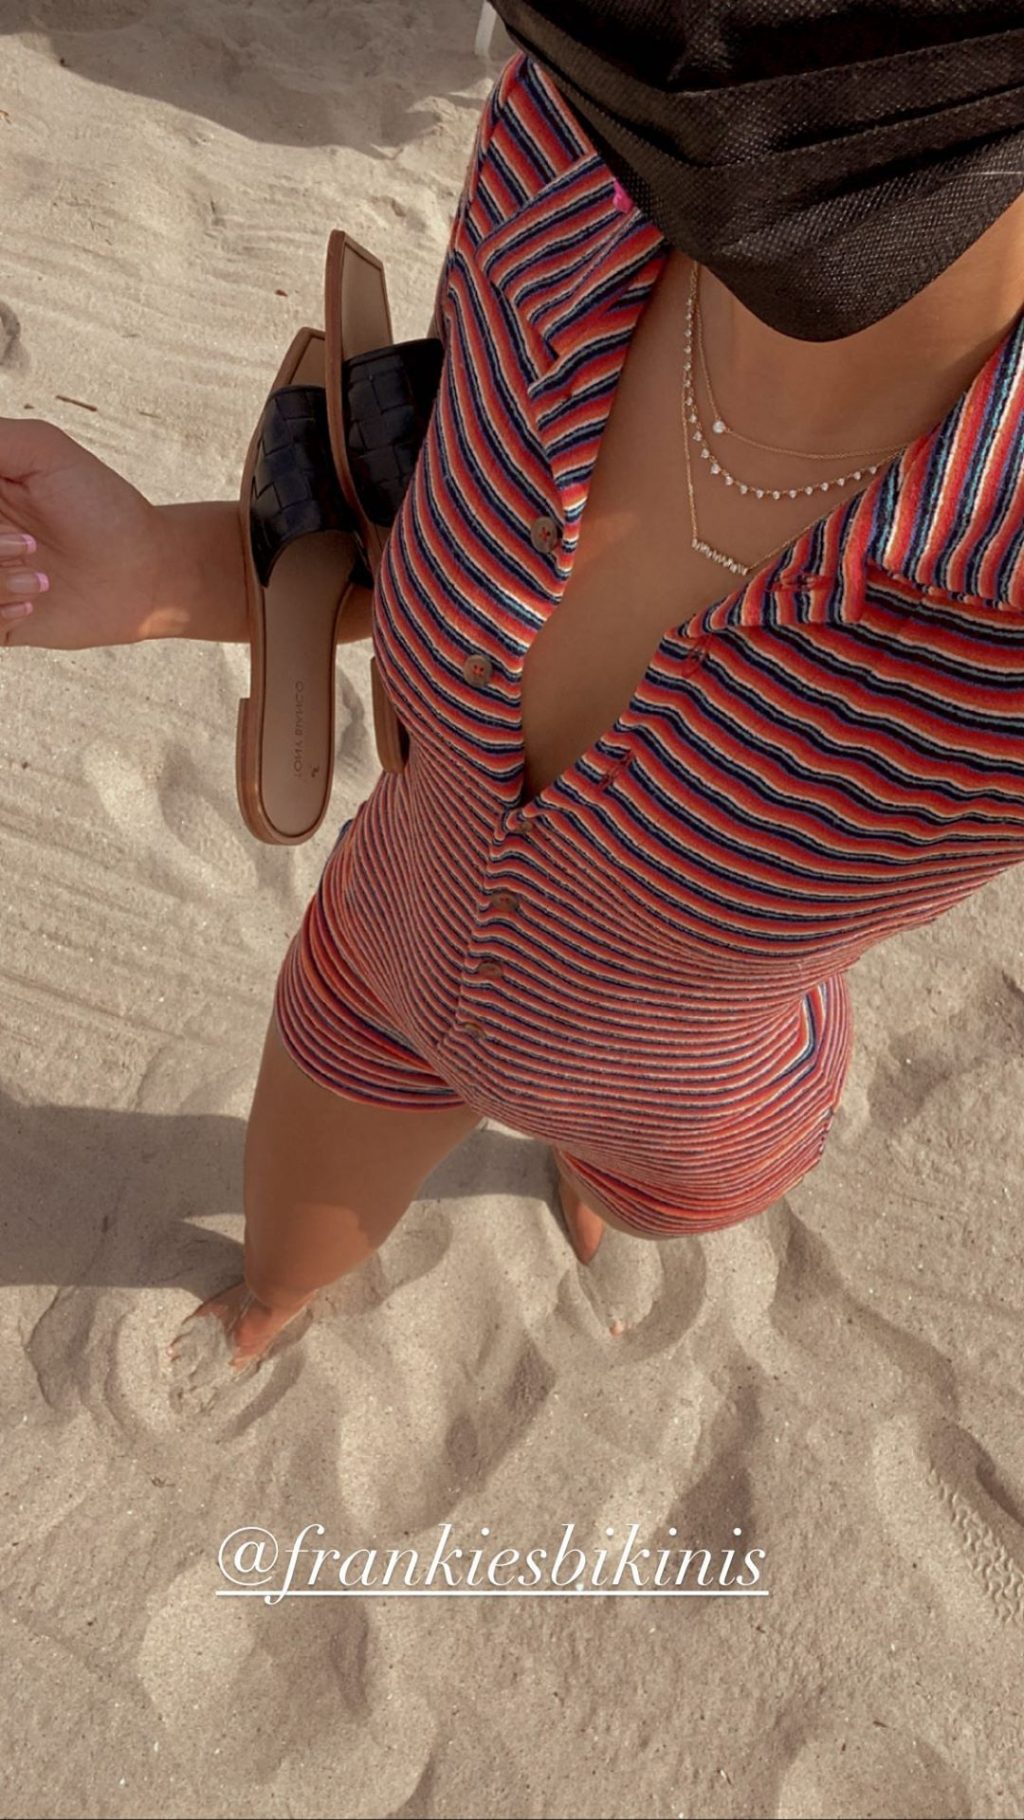 Sofia Richie Shows Off Her Curves on the Beach in Santa Barbara (15 Photos)